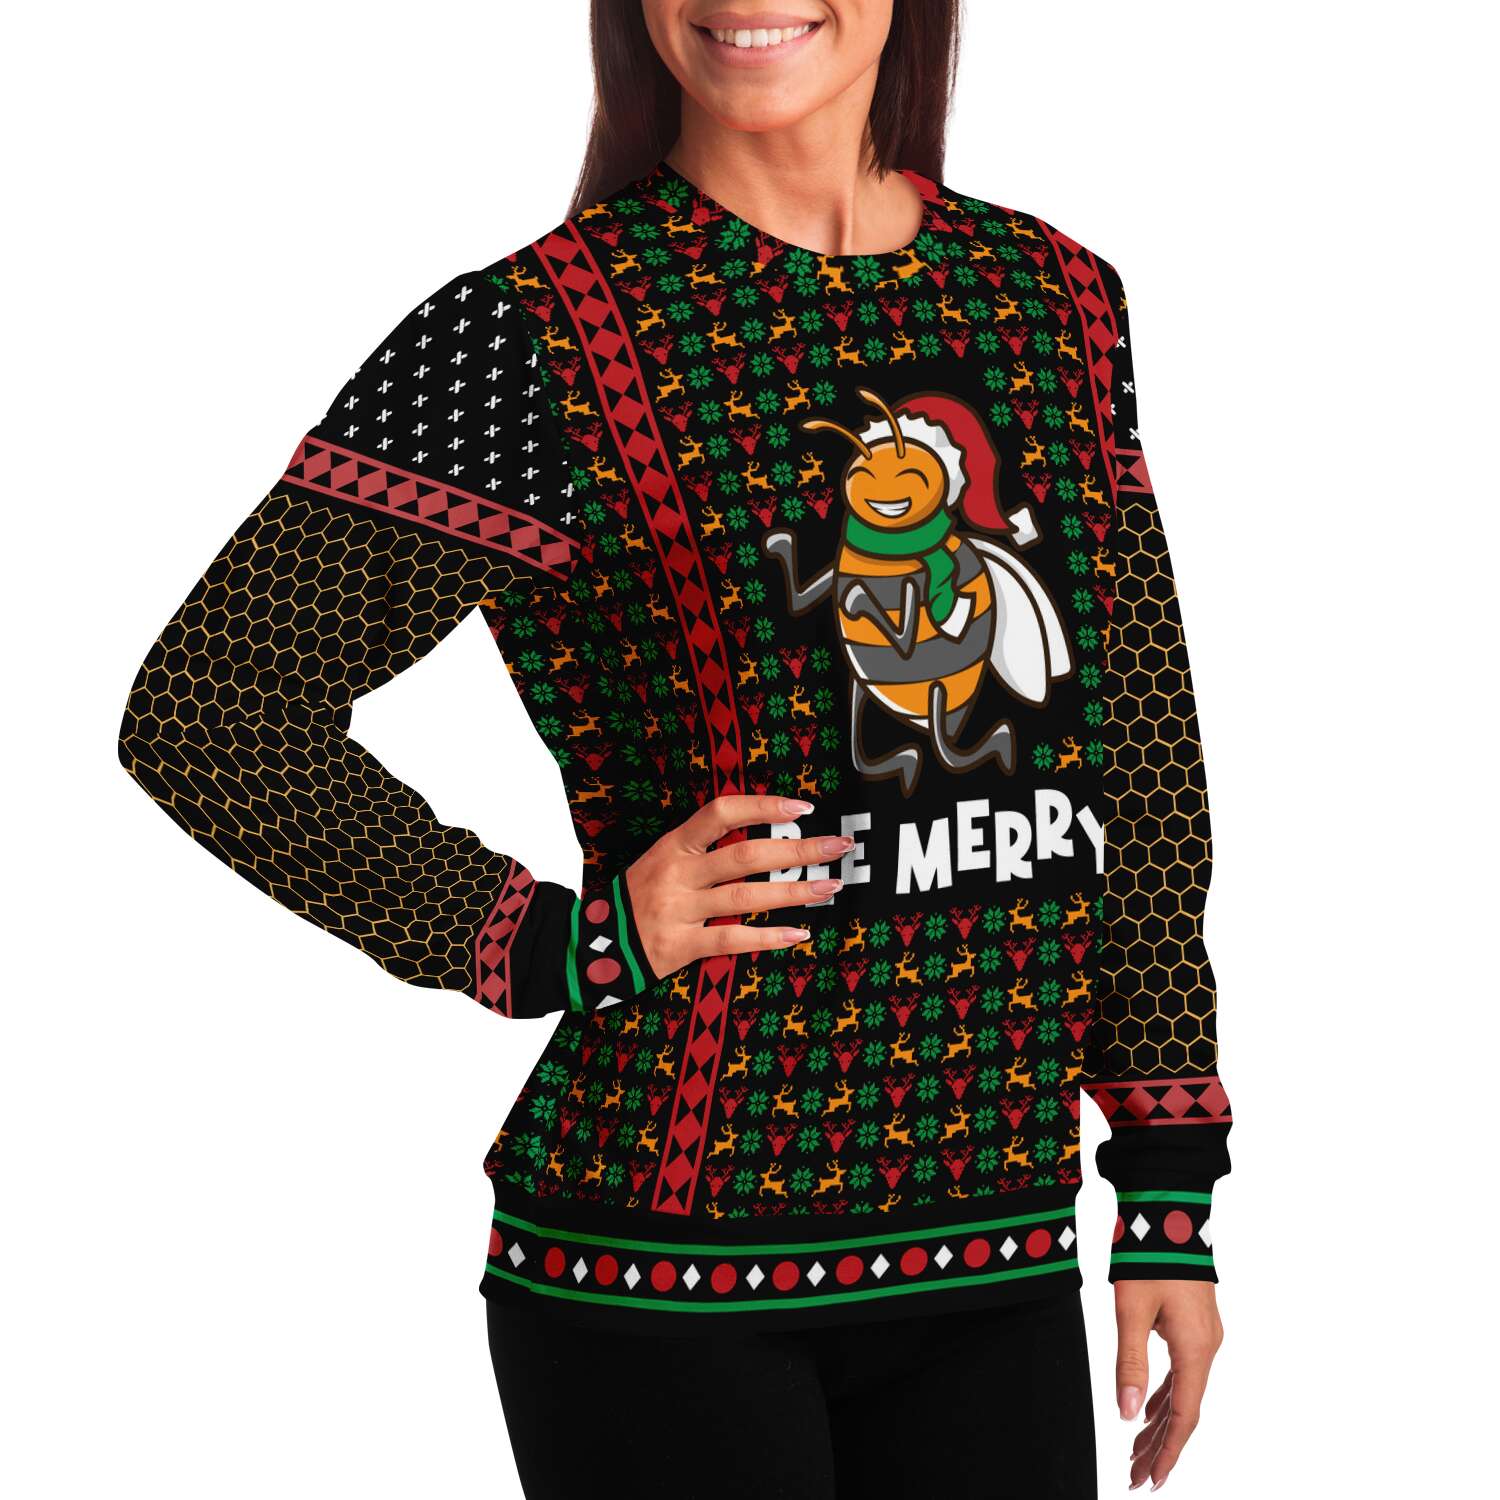 Bee Merry Sweatshirt | Unisex Ugly Christmas Sweater, Xmas Sweater, Holiday Sweater, Festive Sweater, Funny Sweater, Funny Party Shirt